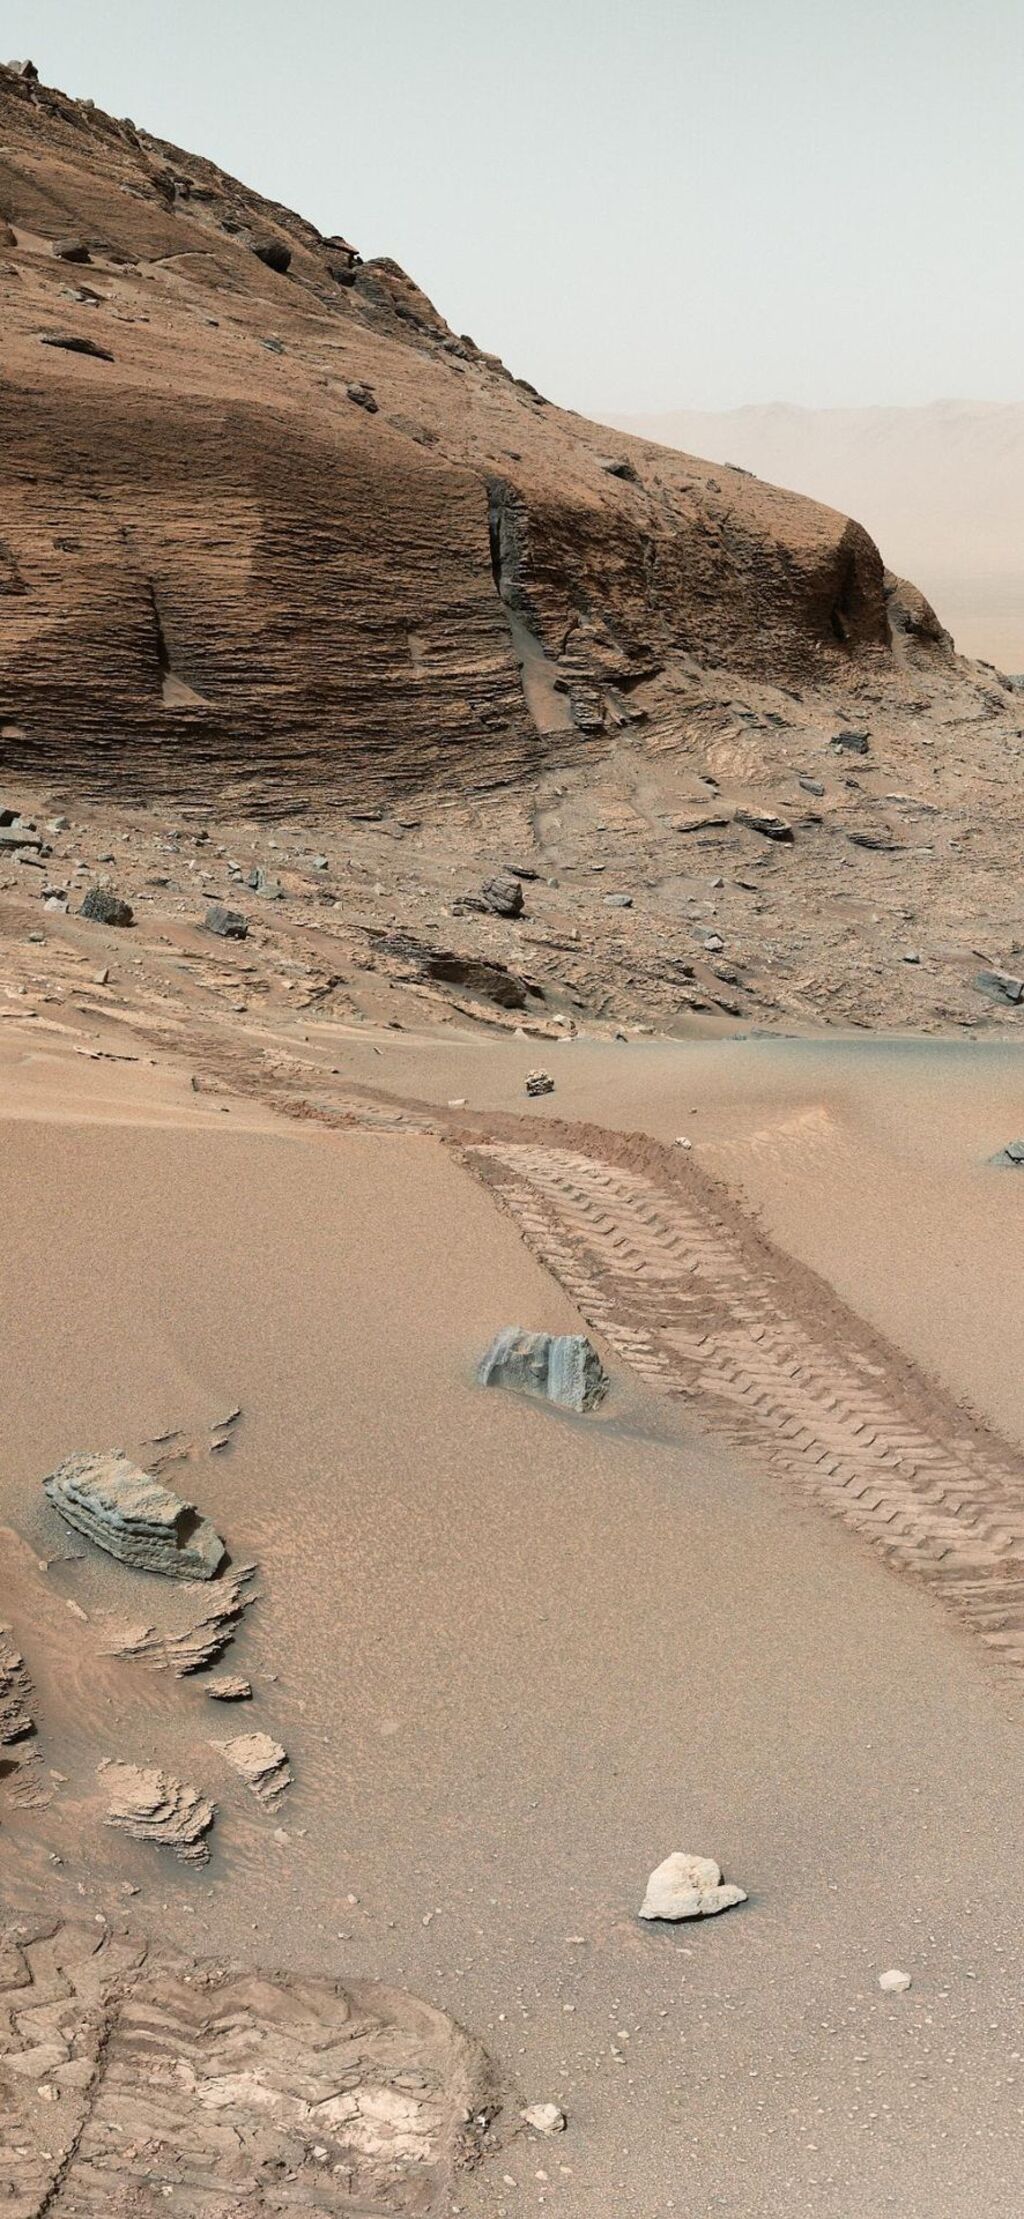 Curiosity "footprints" on the surface of Mars